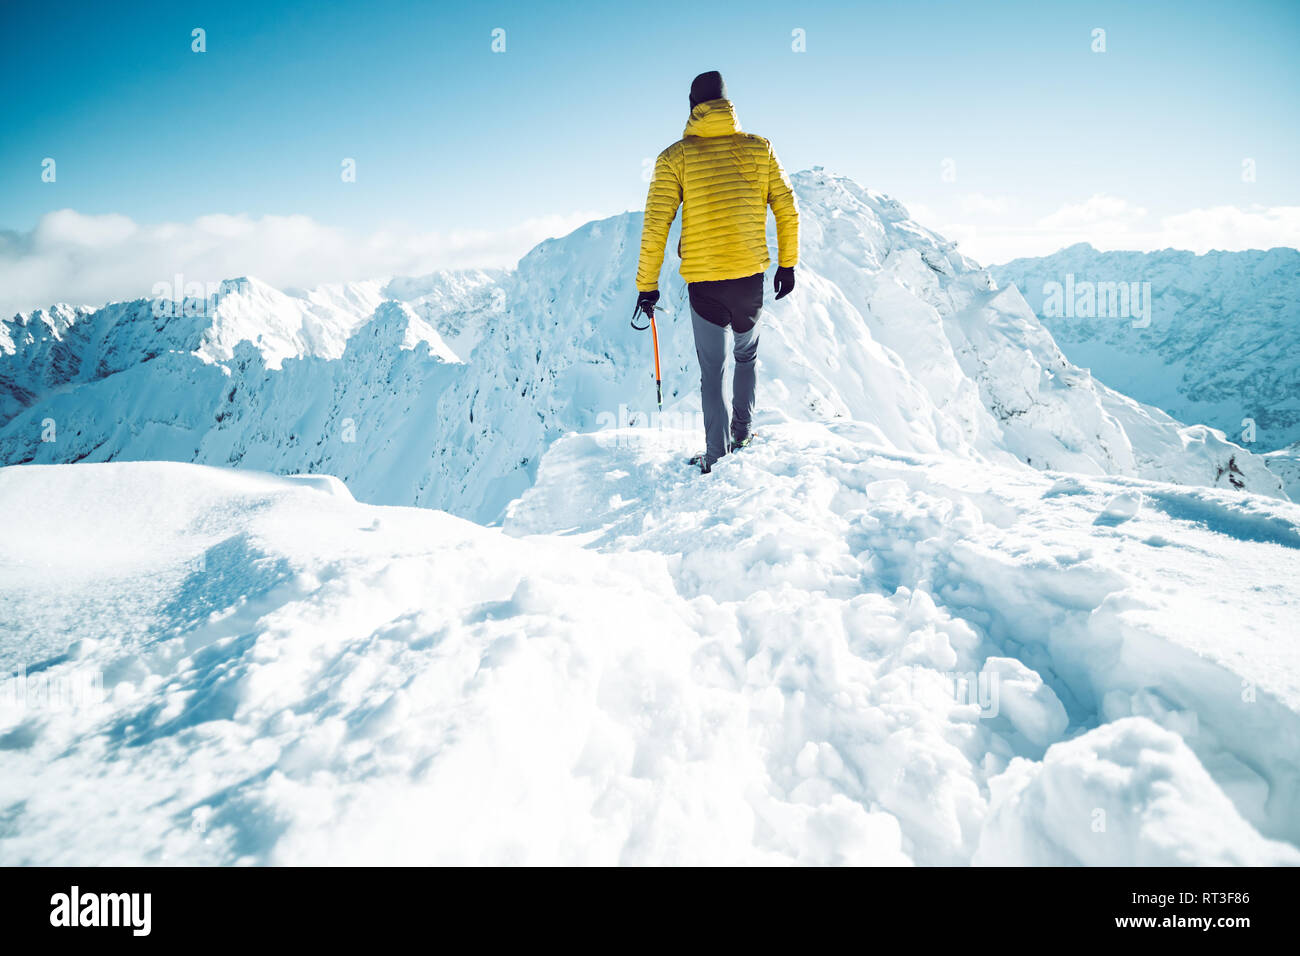 A climber ascending a mountain in winter Stock Photo